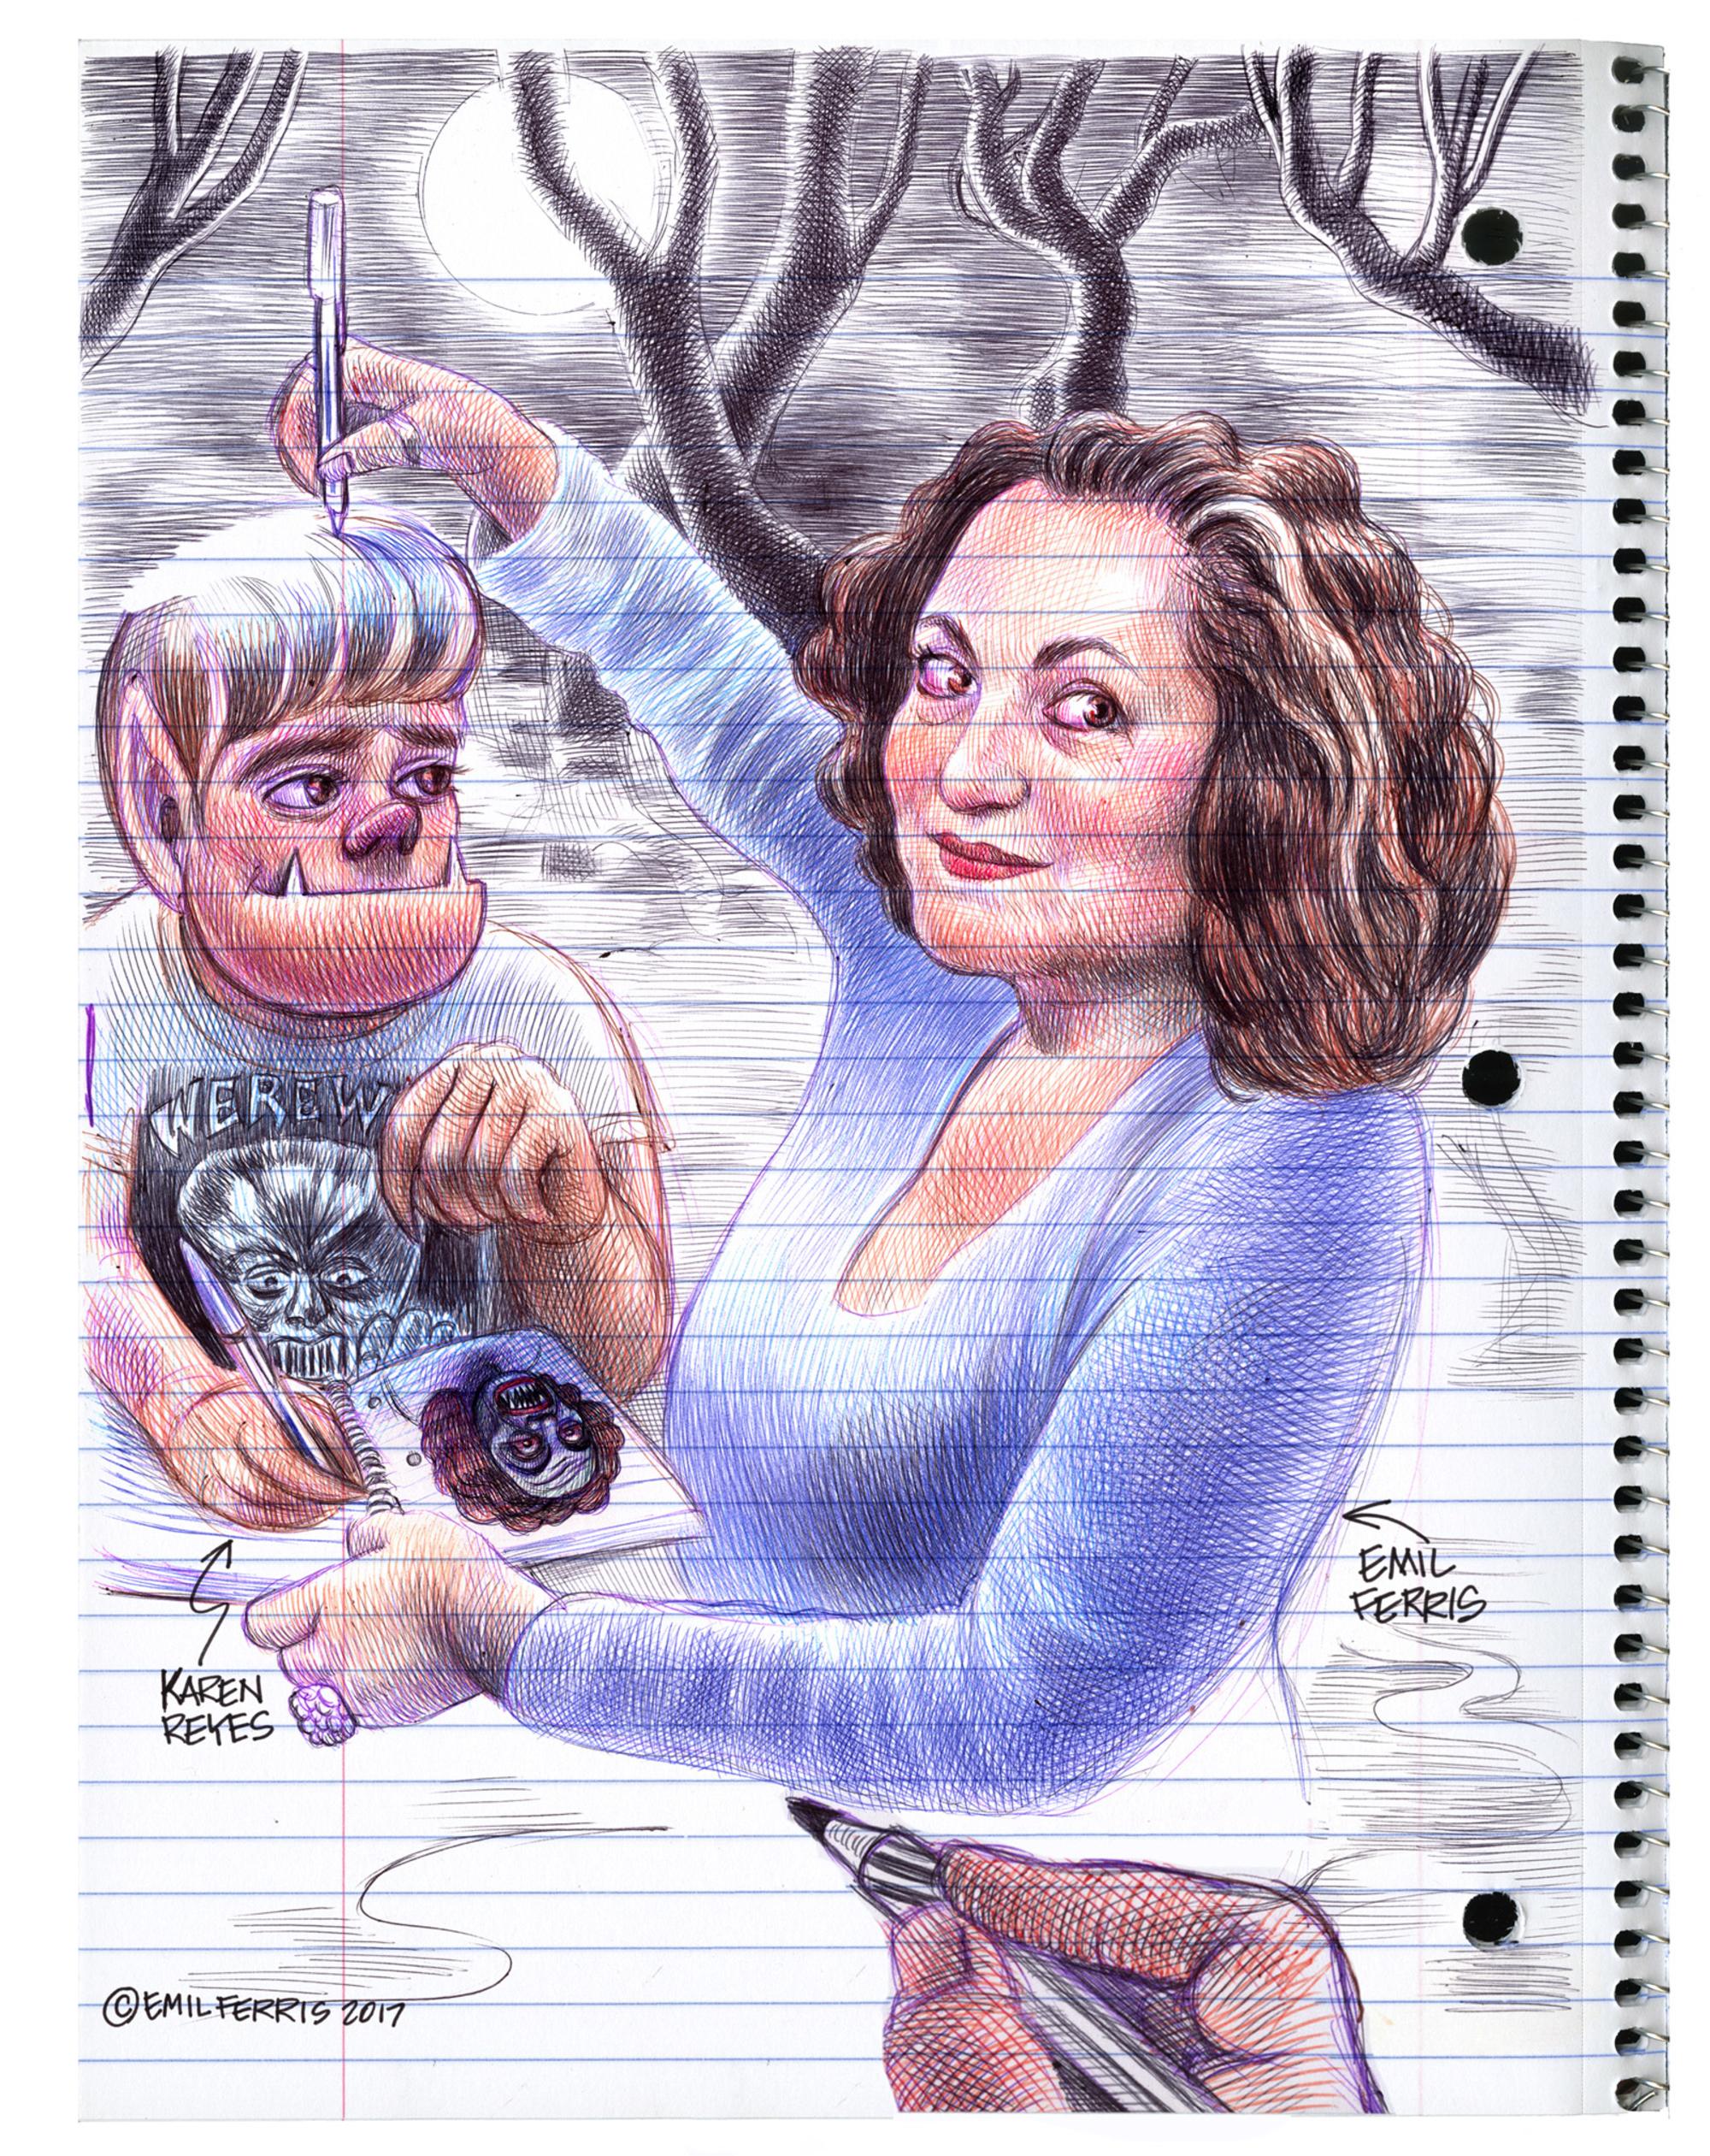 Autorretrato de la ilustradora Emil Ferris junto a su criatura, Karen Reyes